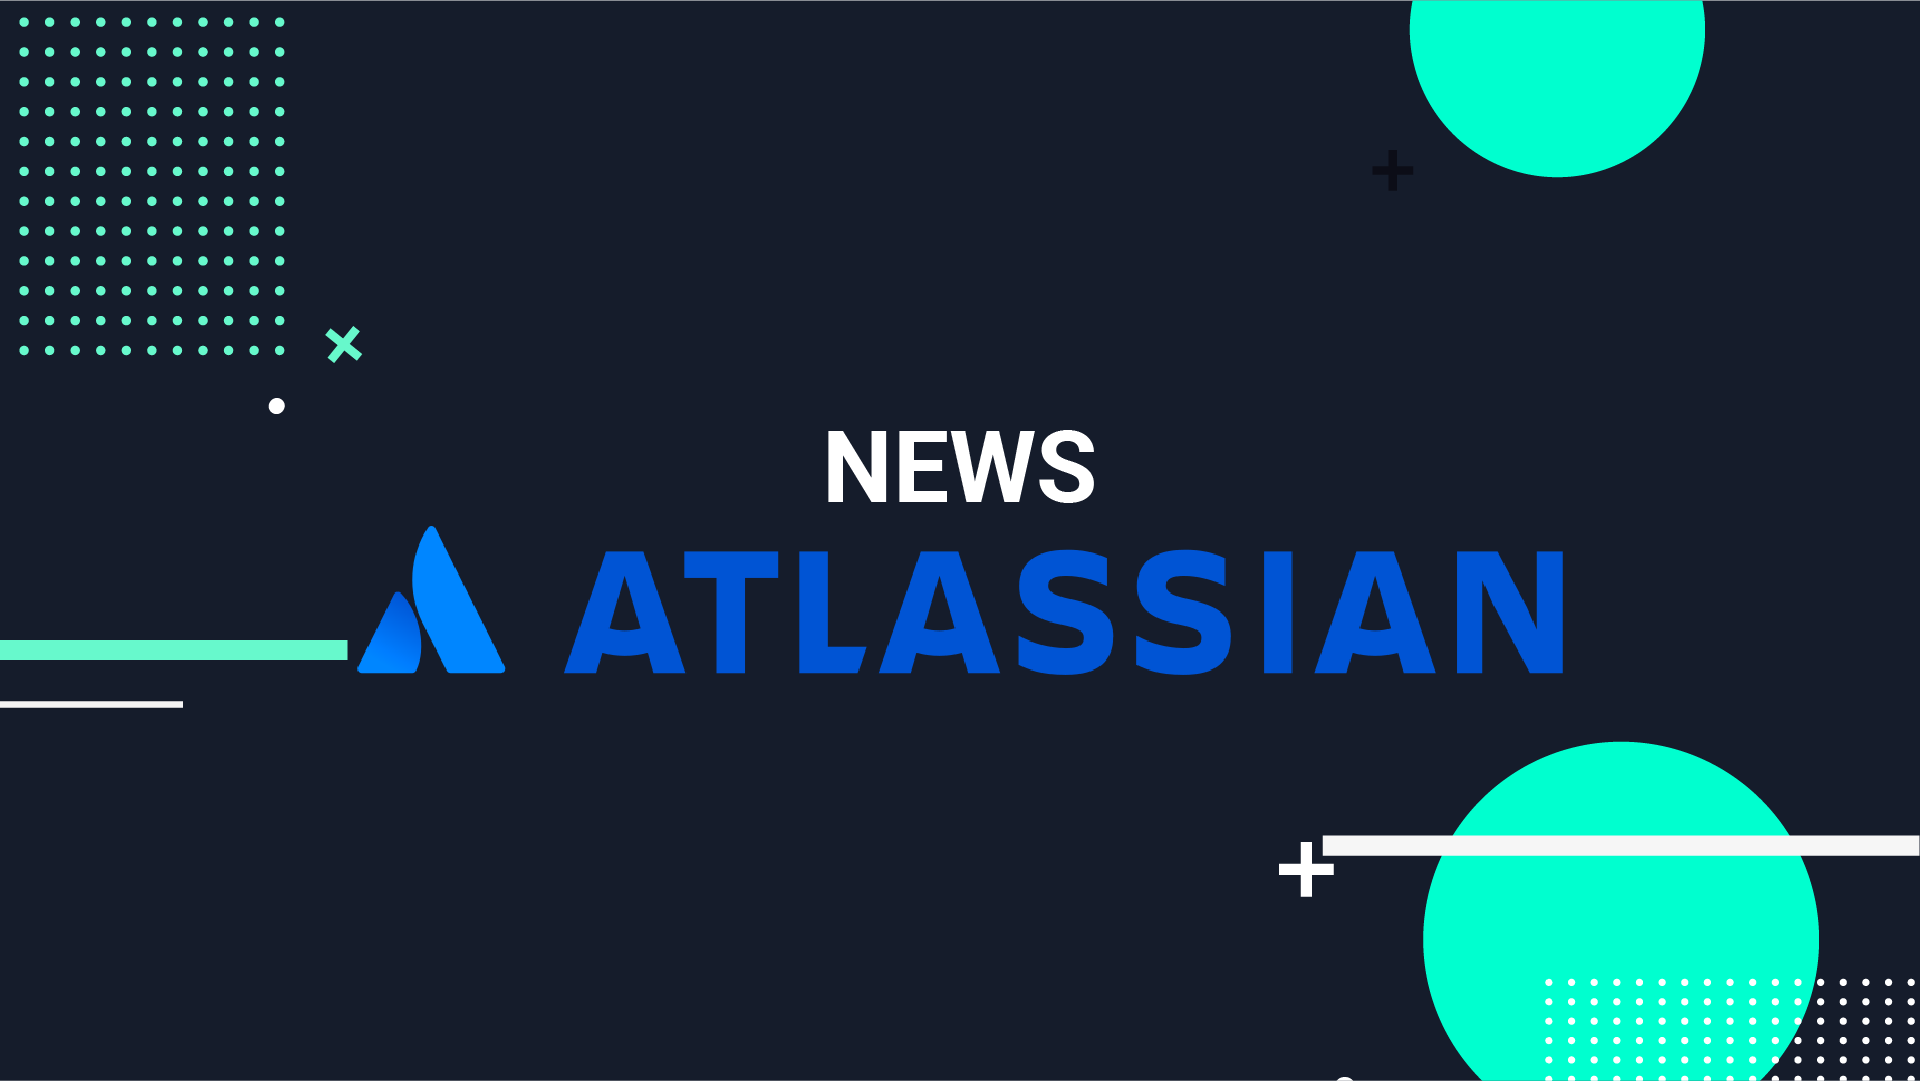 atlassian-pricing-news.png 